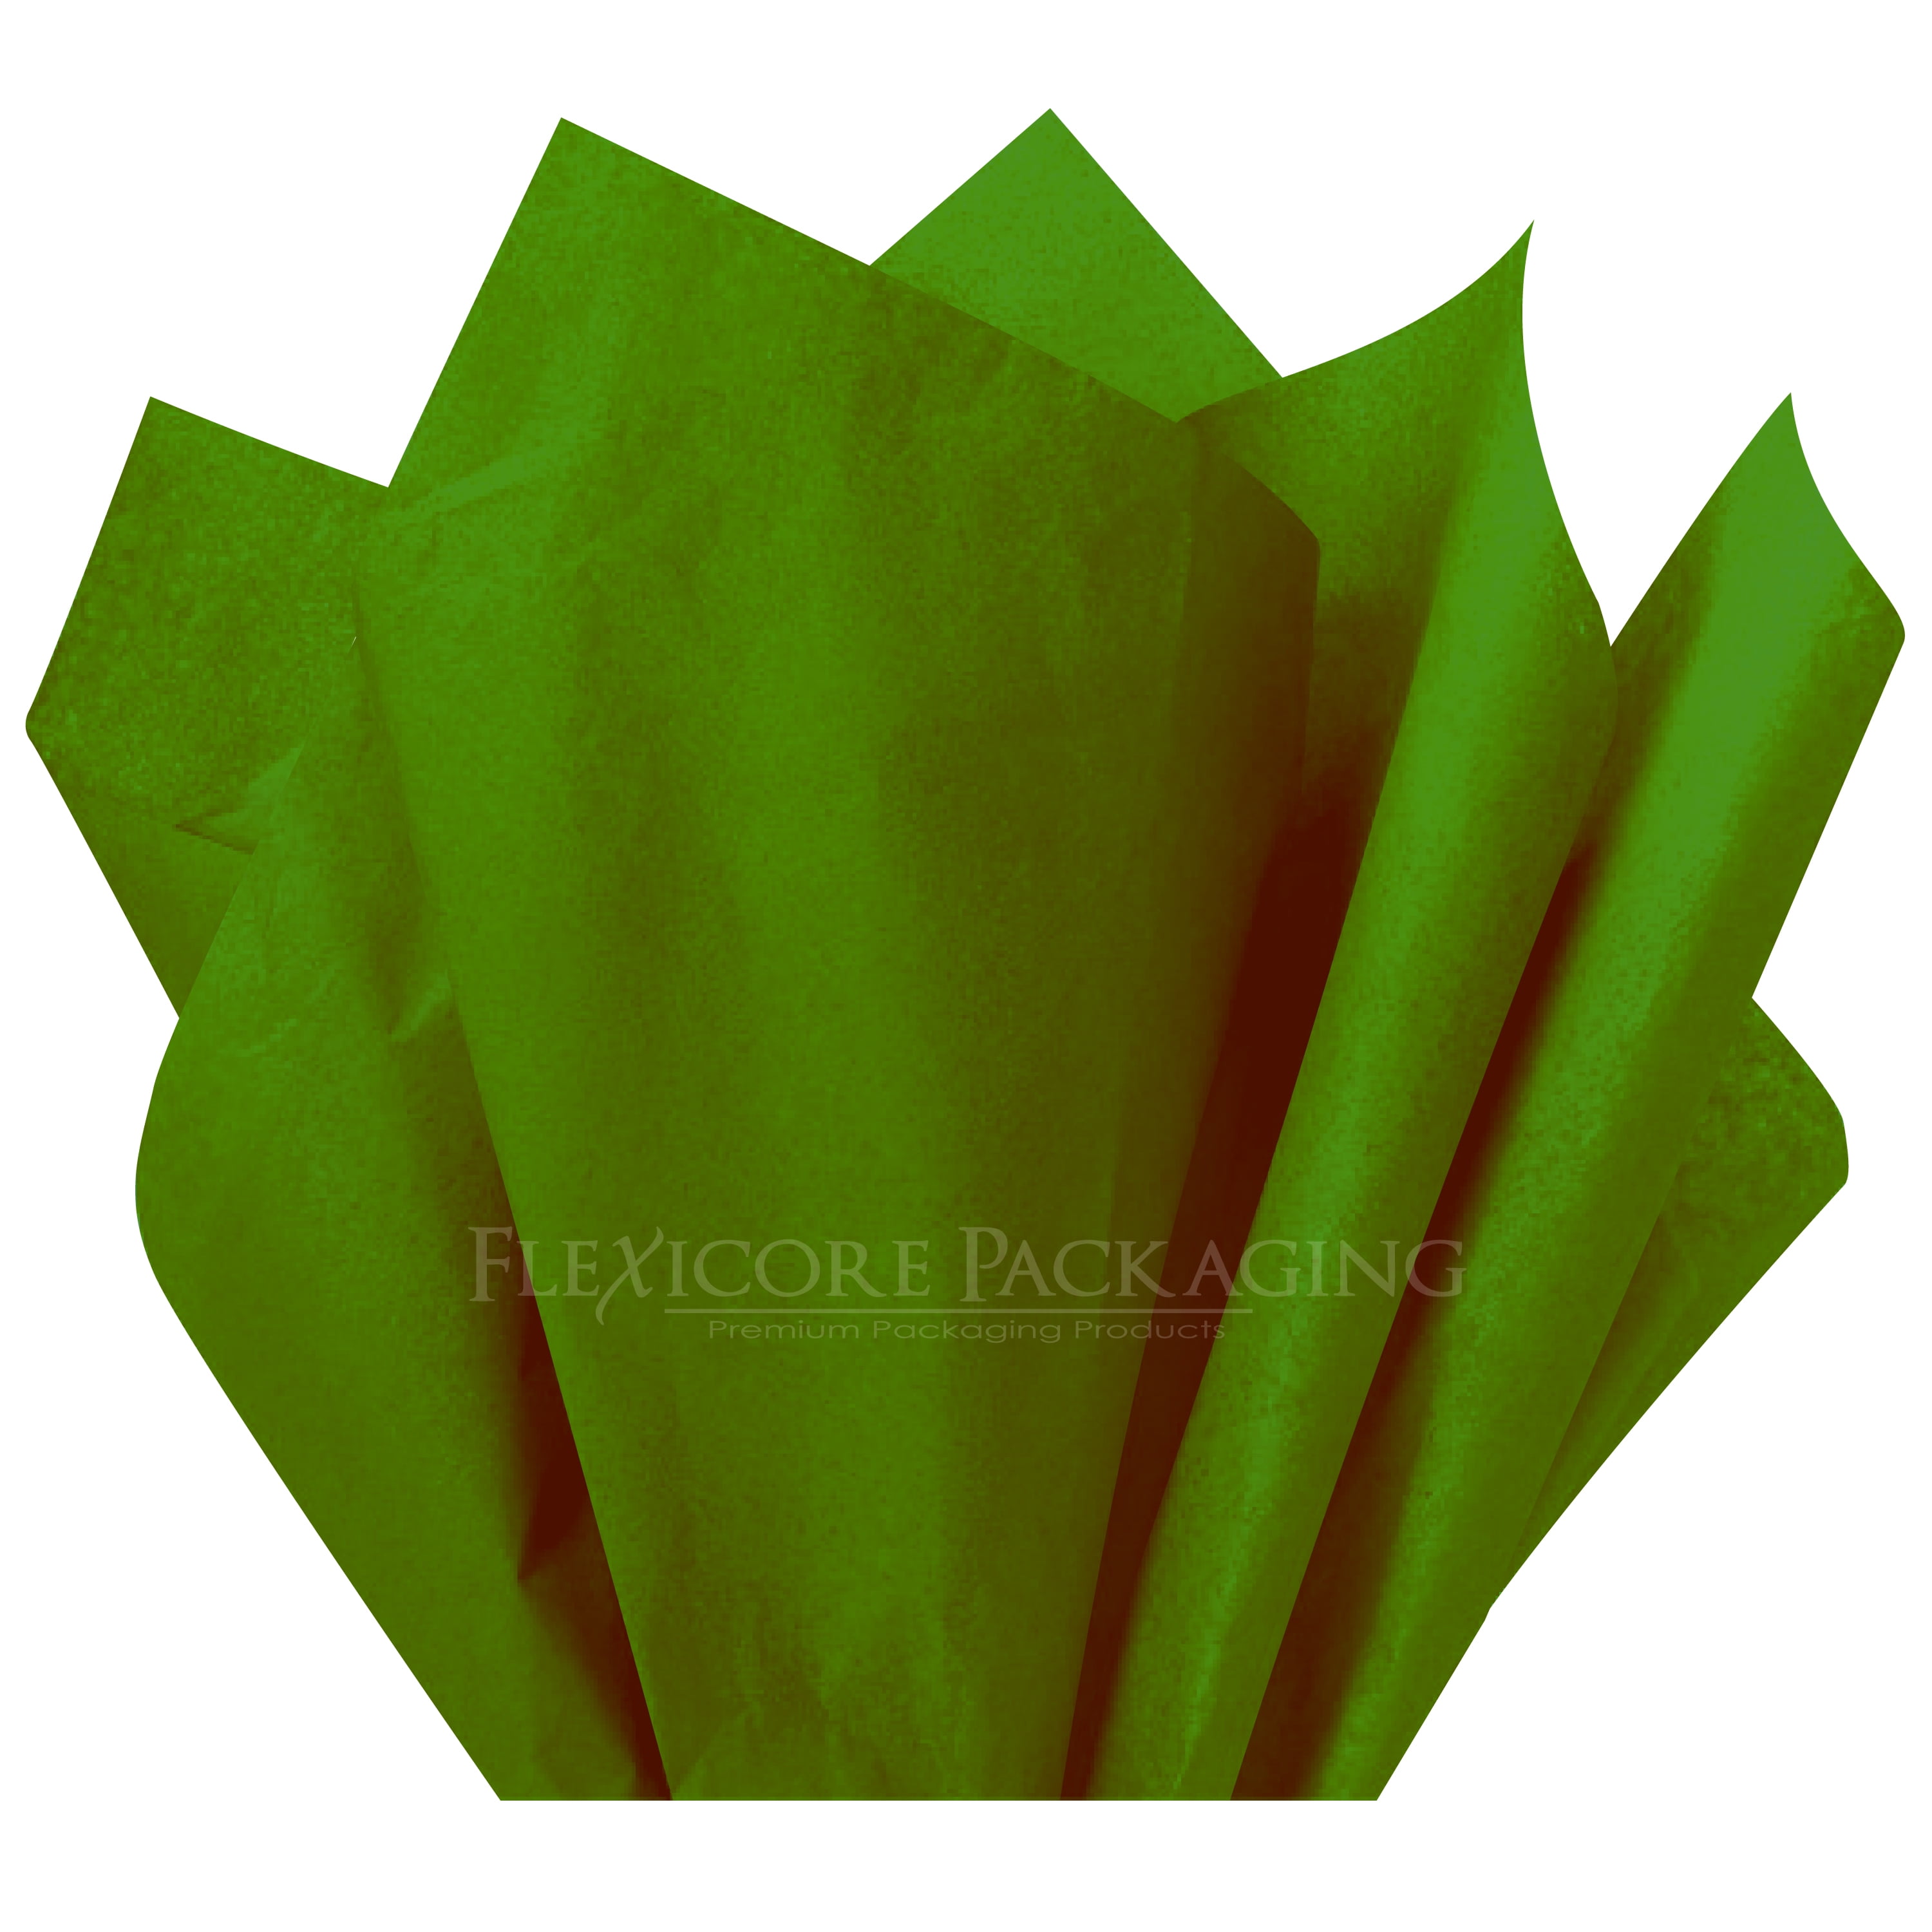 Moss Green Tissue Paper, 15 inchx20 inch, 100 ct